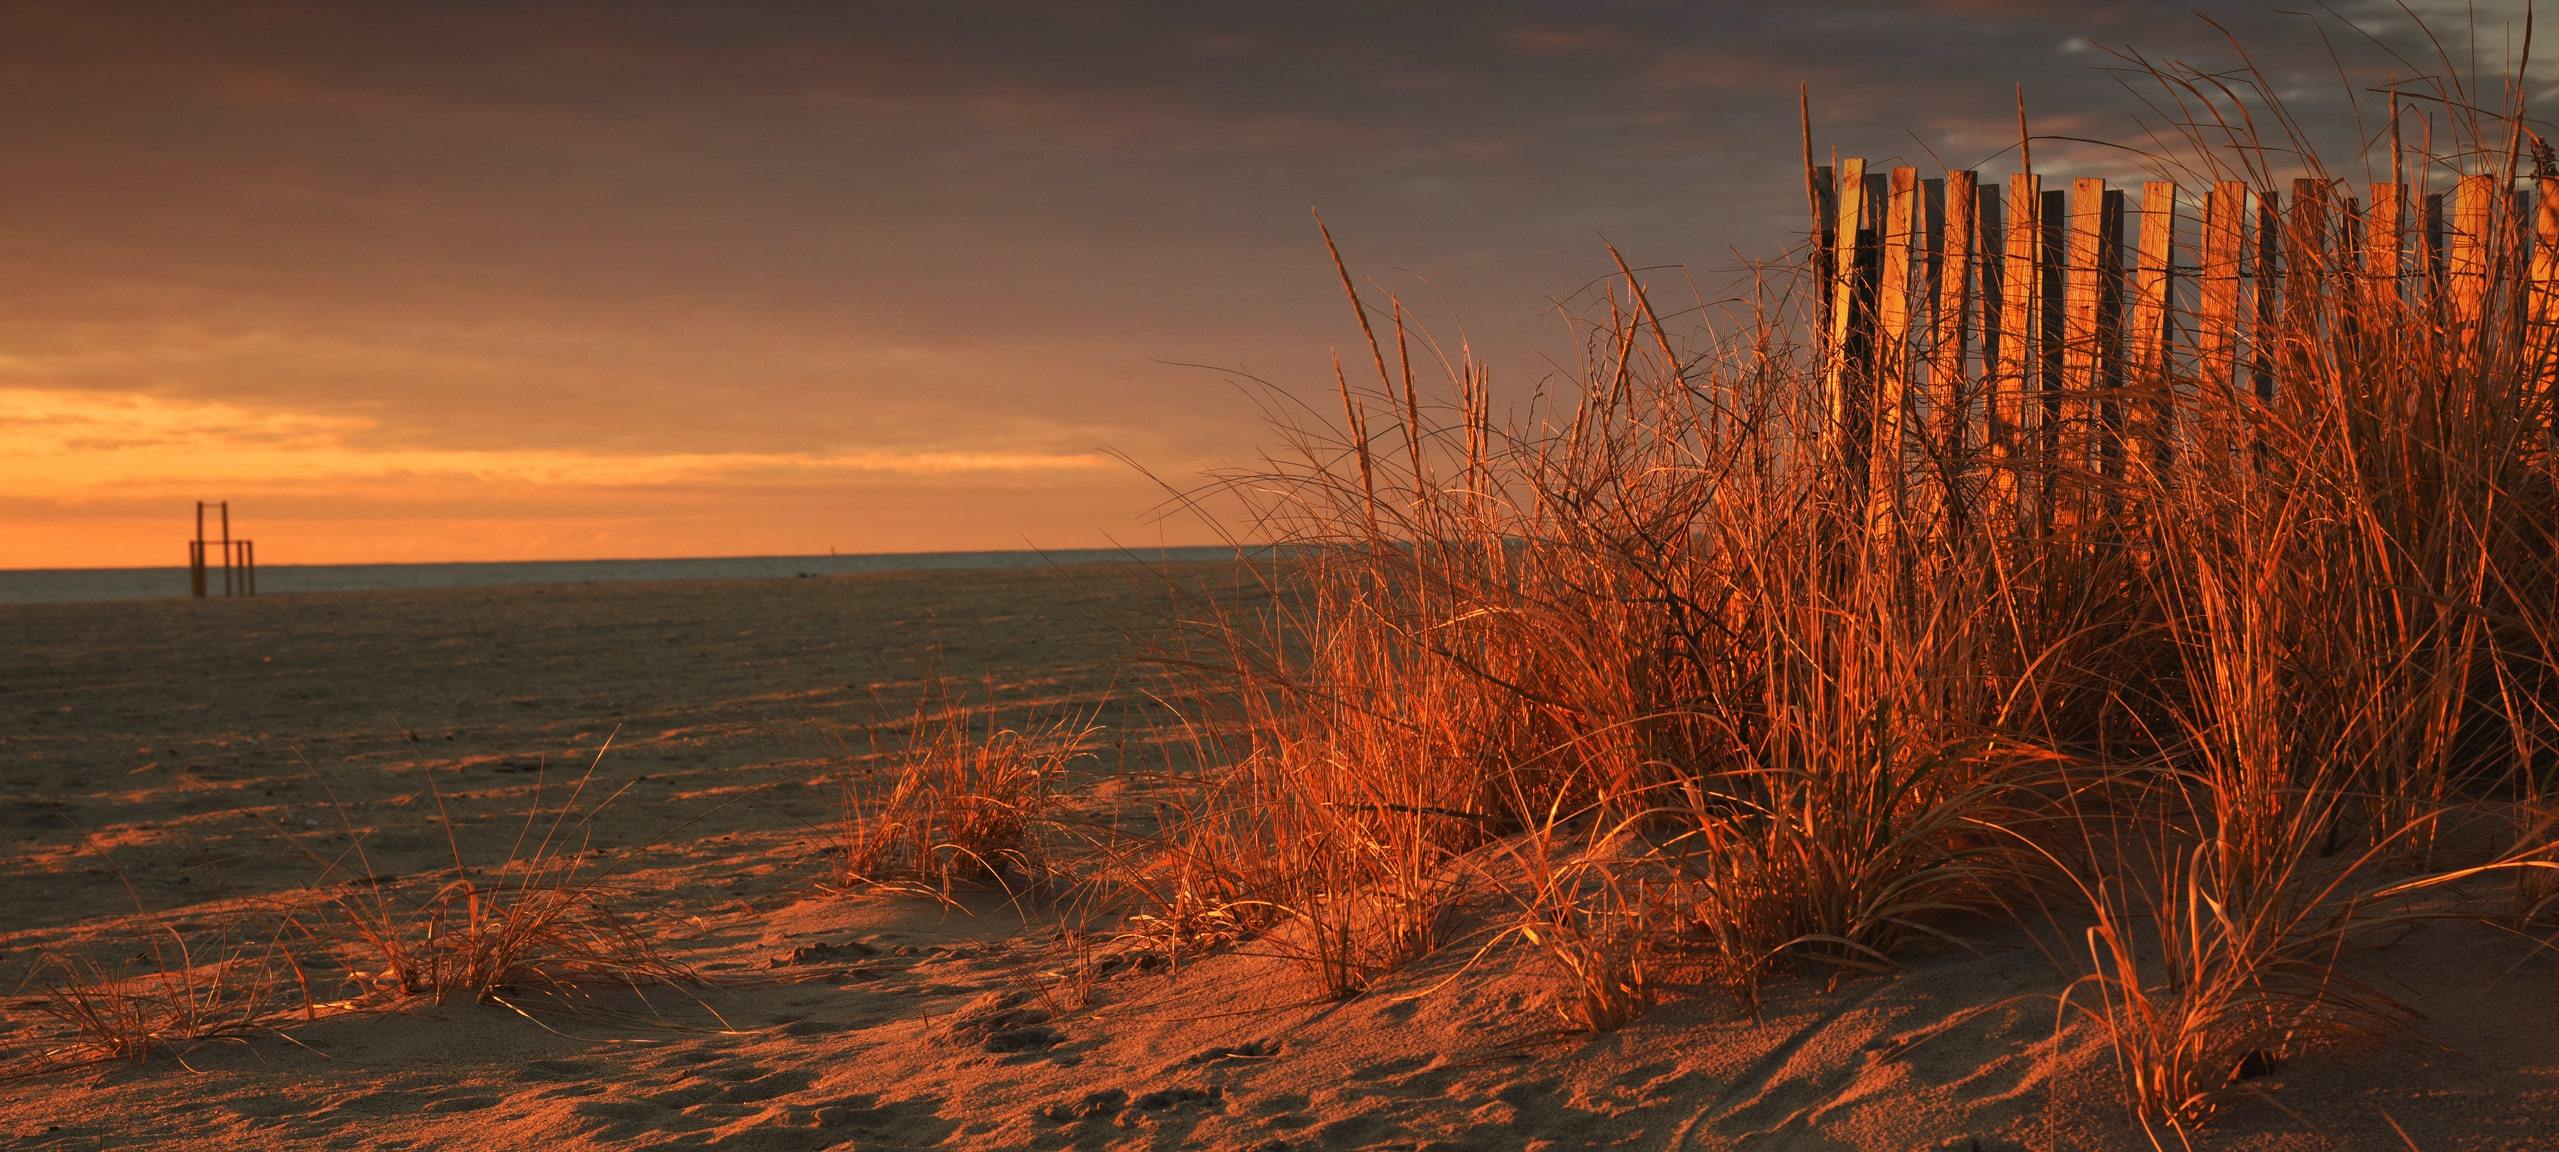 Sea grass at beach front during sunset, Bradley Beach, NJ